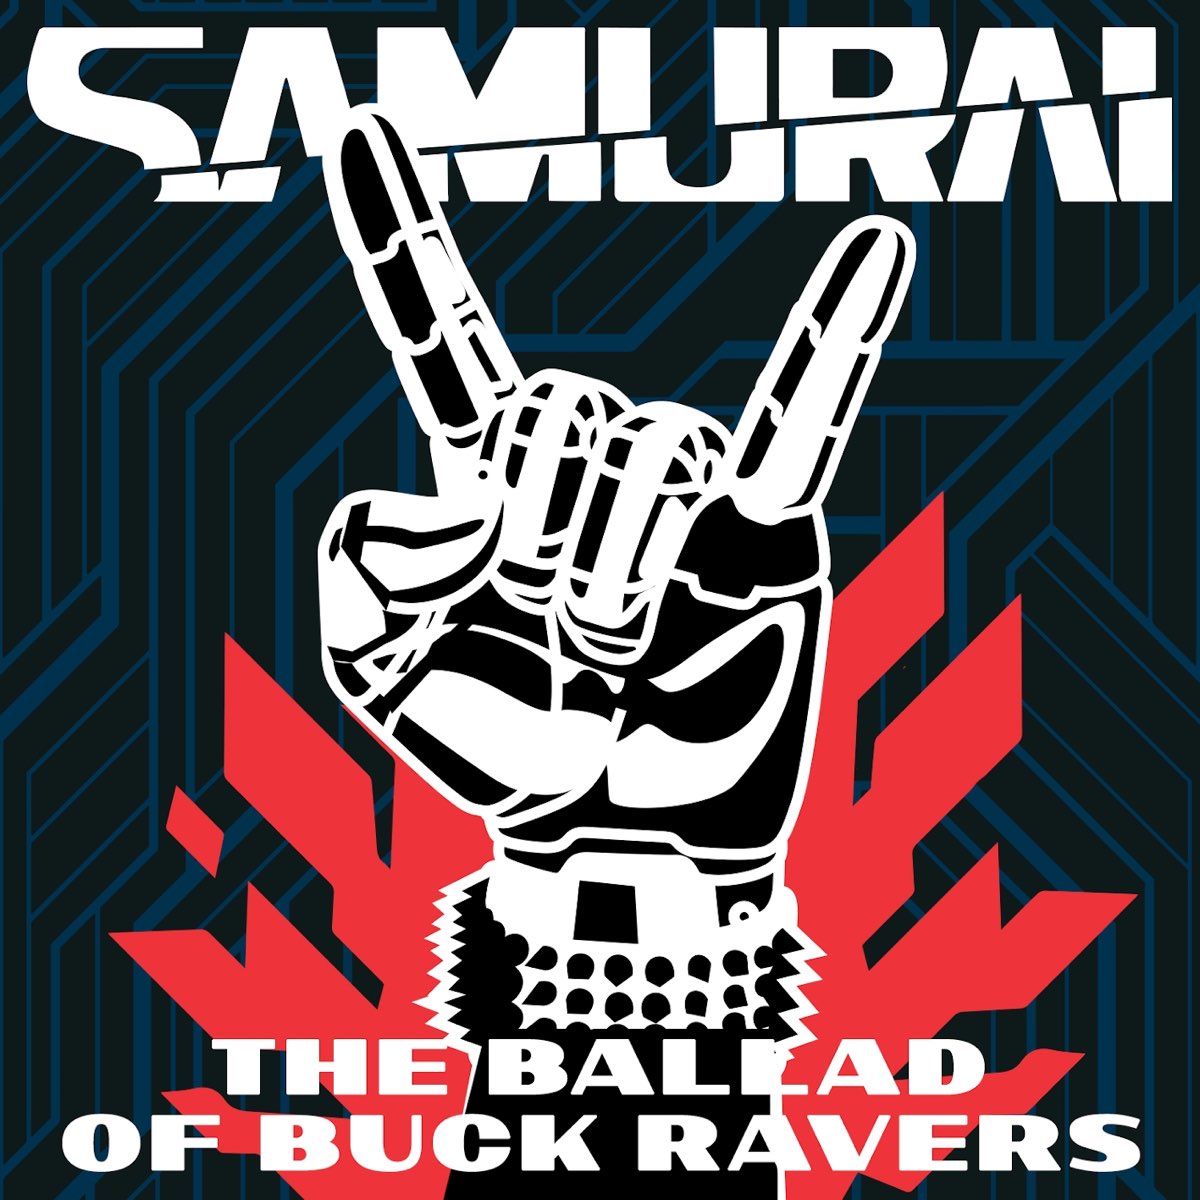 Samurai группа cyberpunk песни фото 1